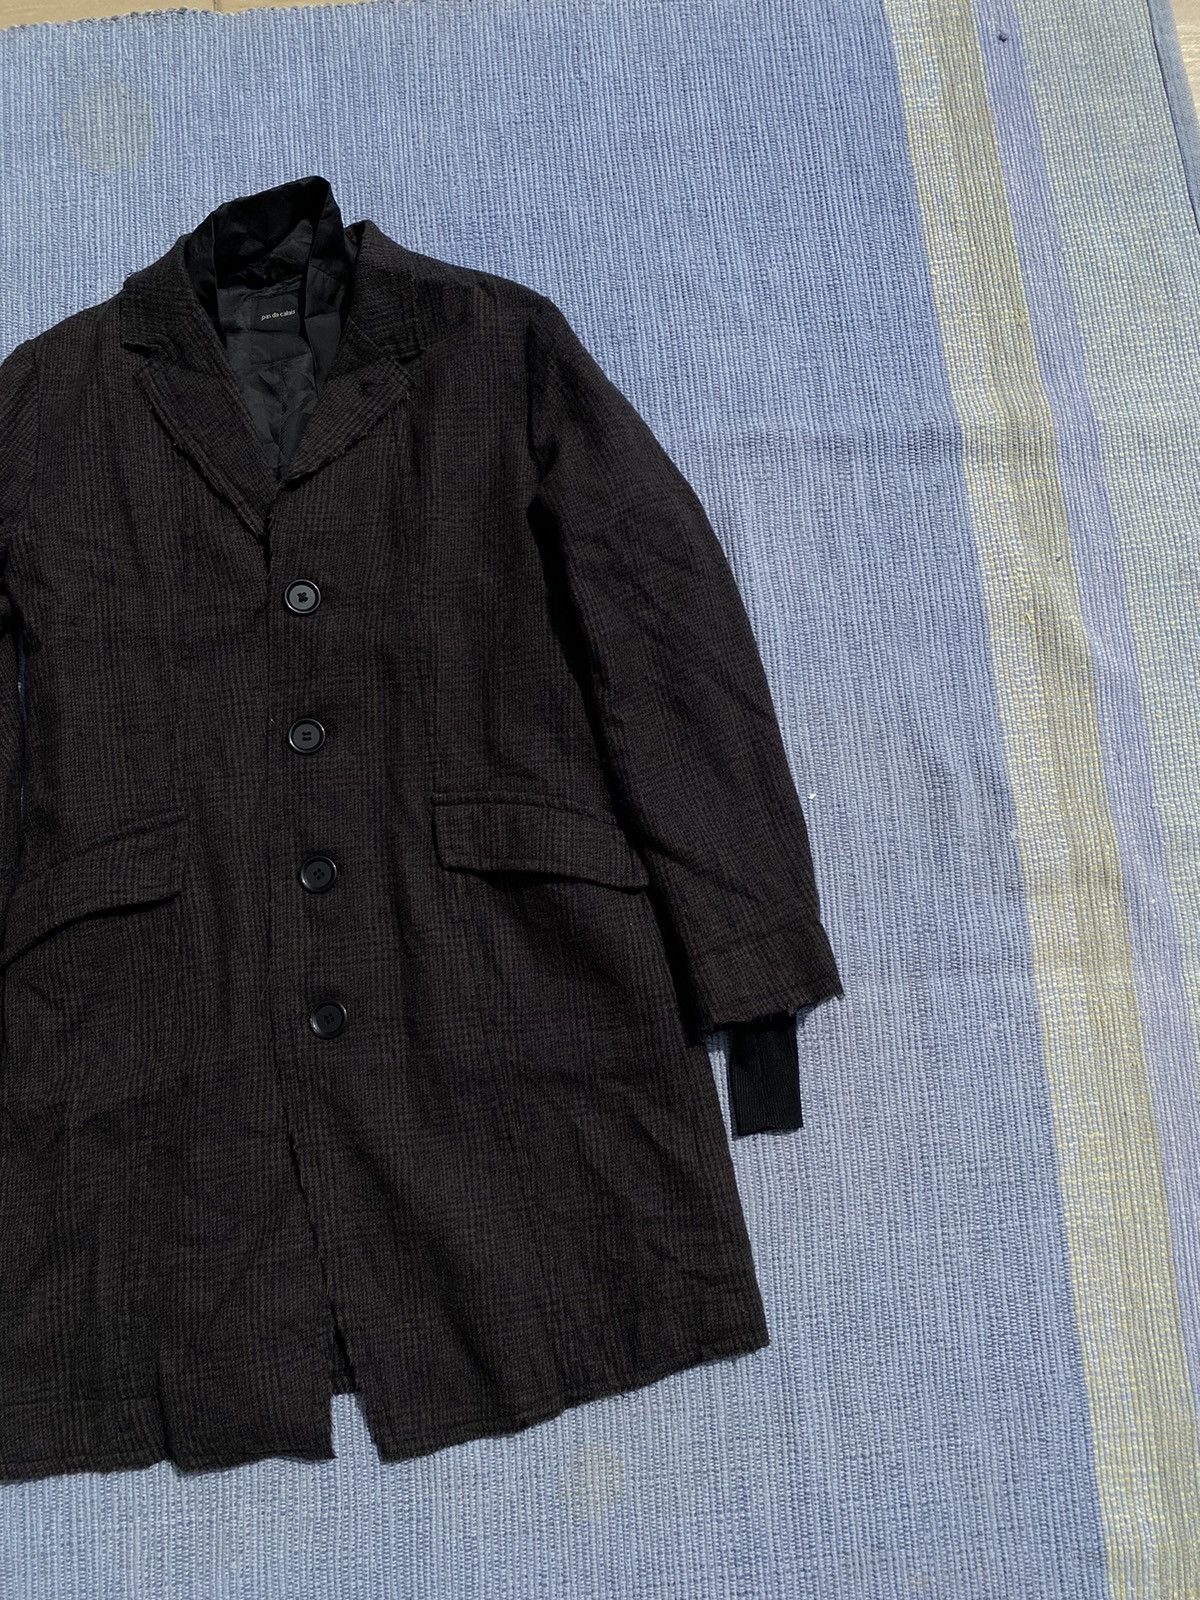 Japanese Brand longcoat Size XS / US 0-2 / IT 36-38 - 9 Thumbnail